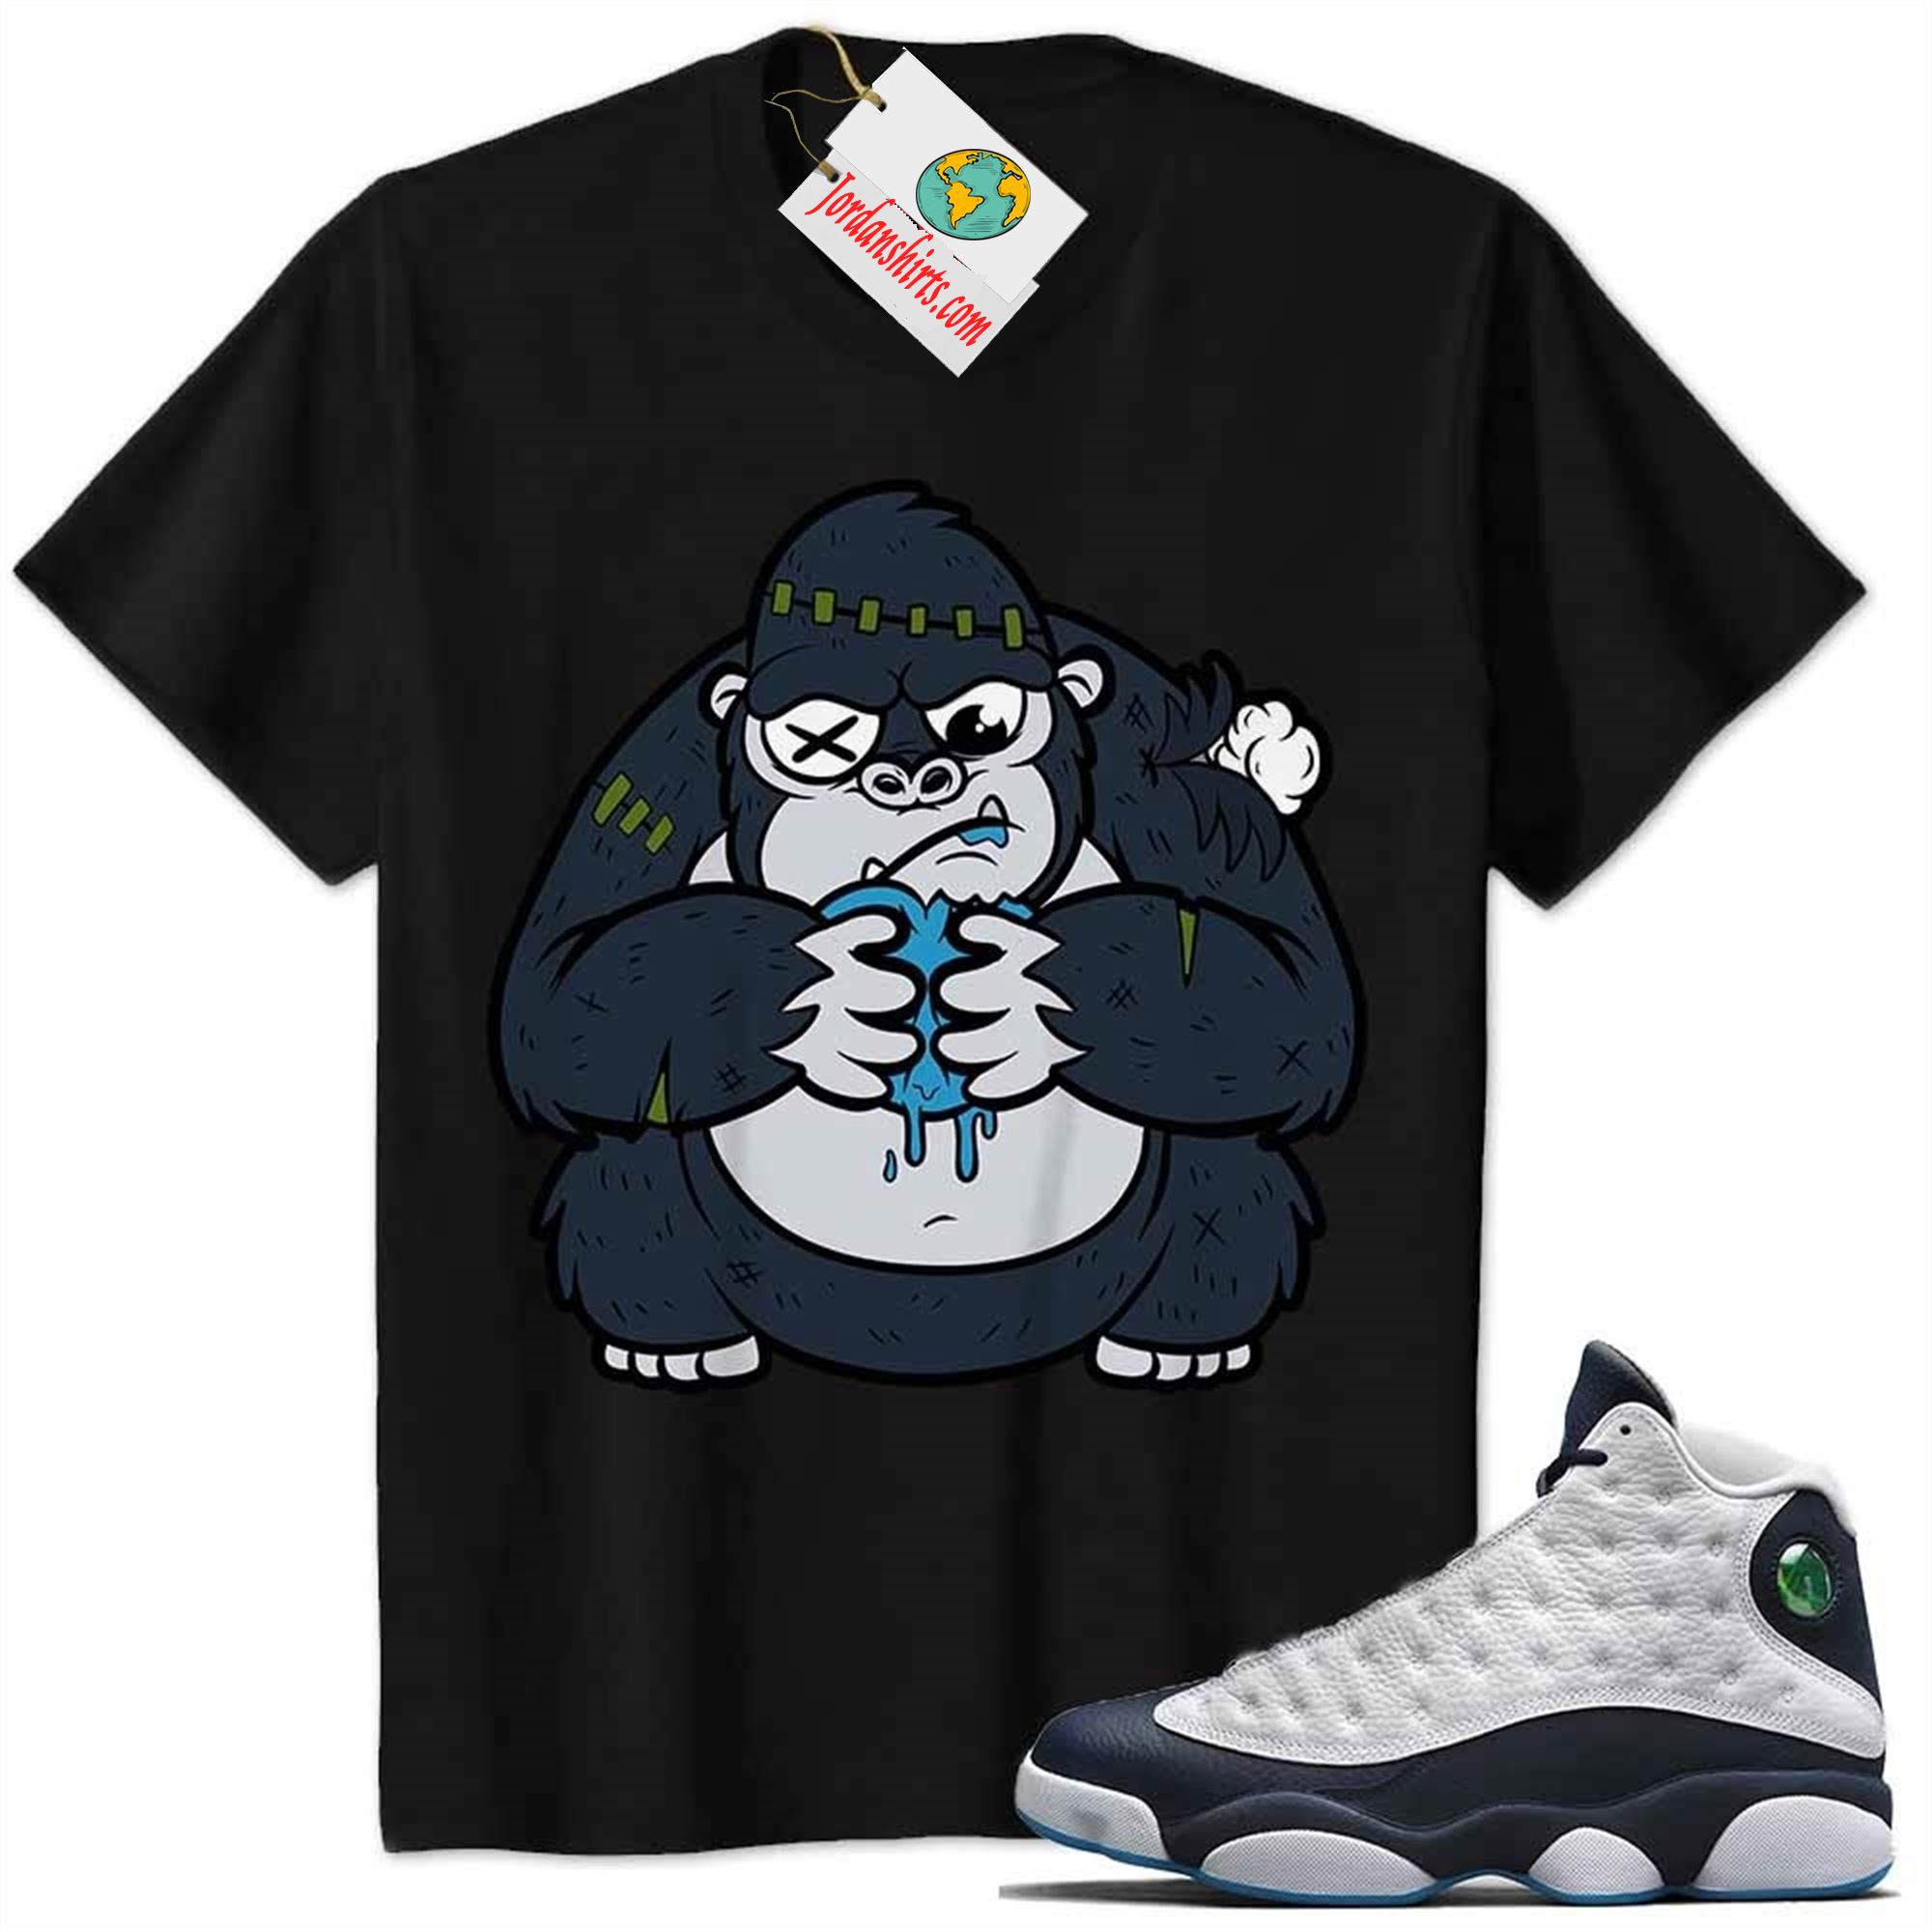 Jordan 13 Shirt, Cute Monkey Broken Heart Black Air Jordan 13 Obsidian 13s Full Size Up To 5xl